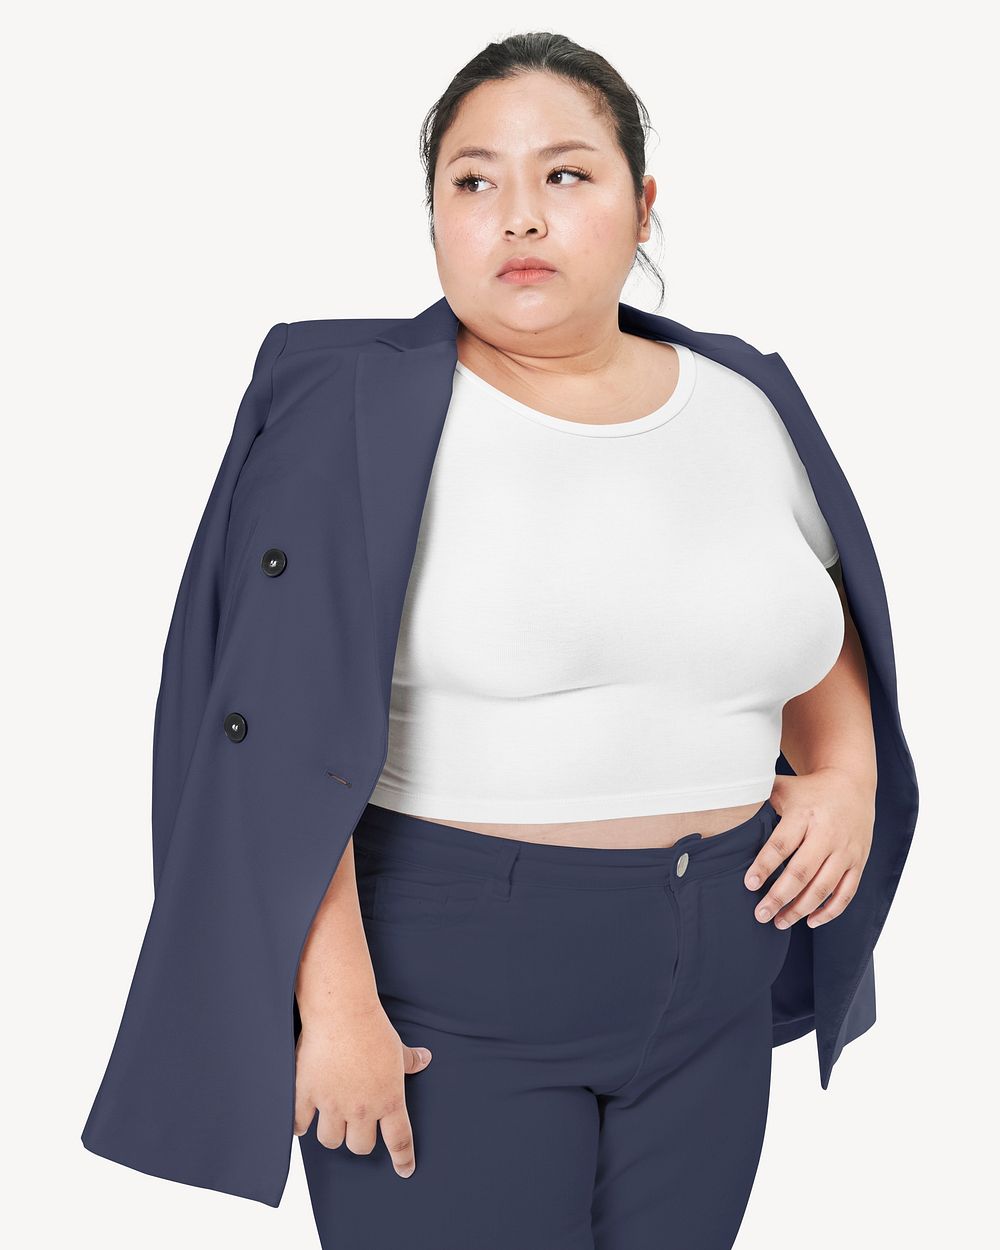 Size inclusive suit mockup, women's apparel psd